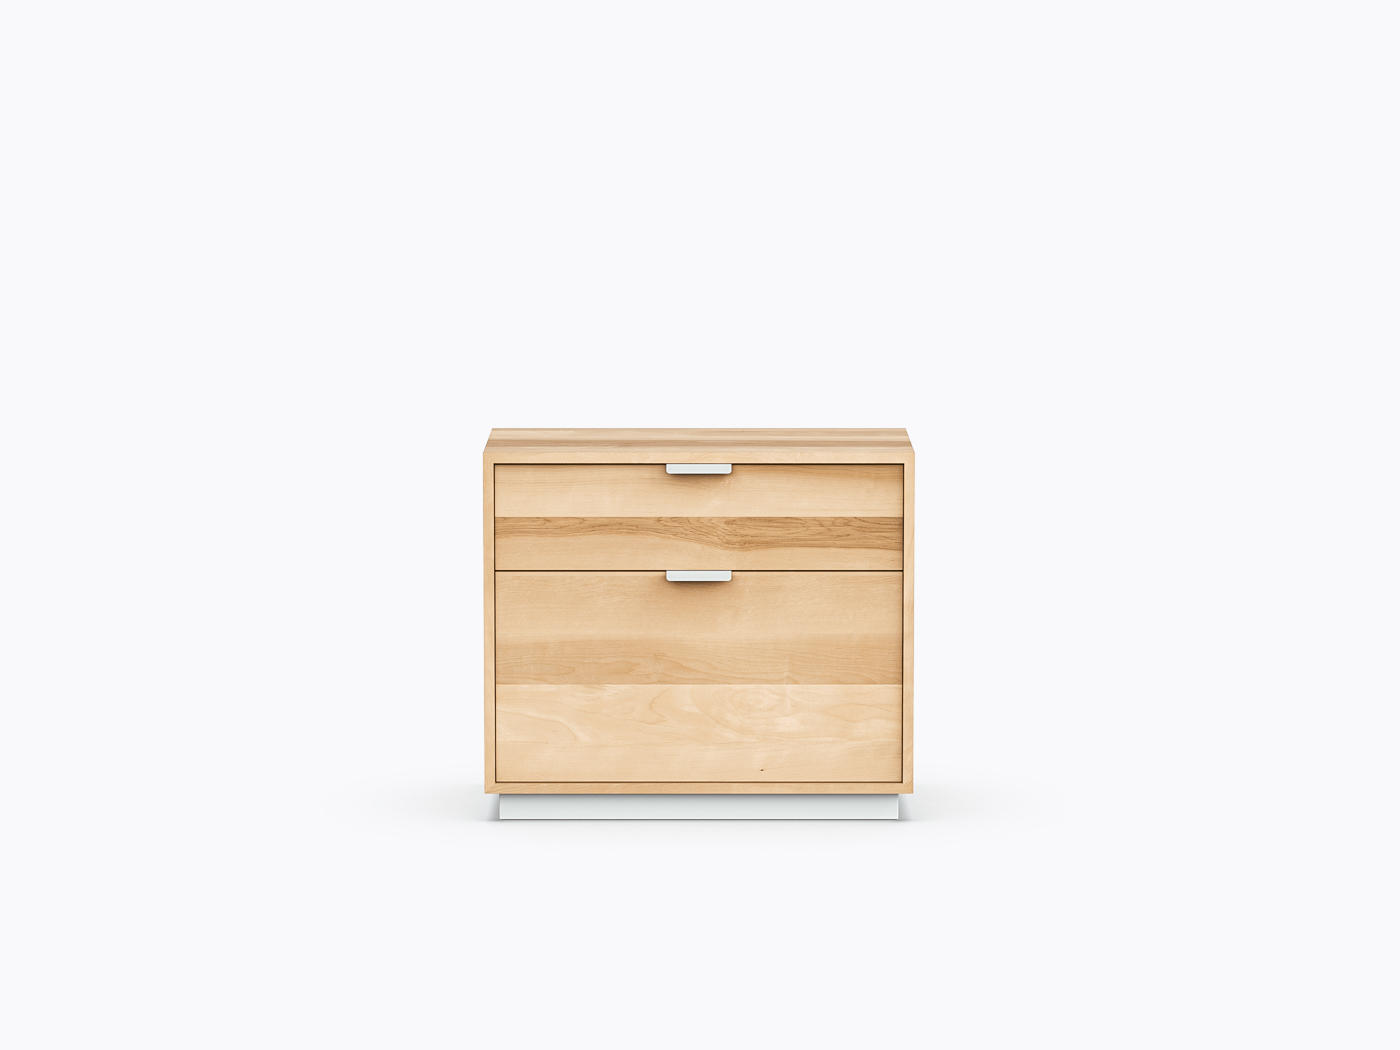 Ross Simple - 1 drawer / 1 file drawer - Yellow Birch